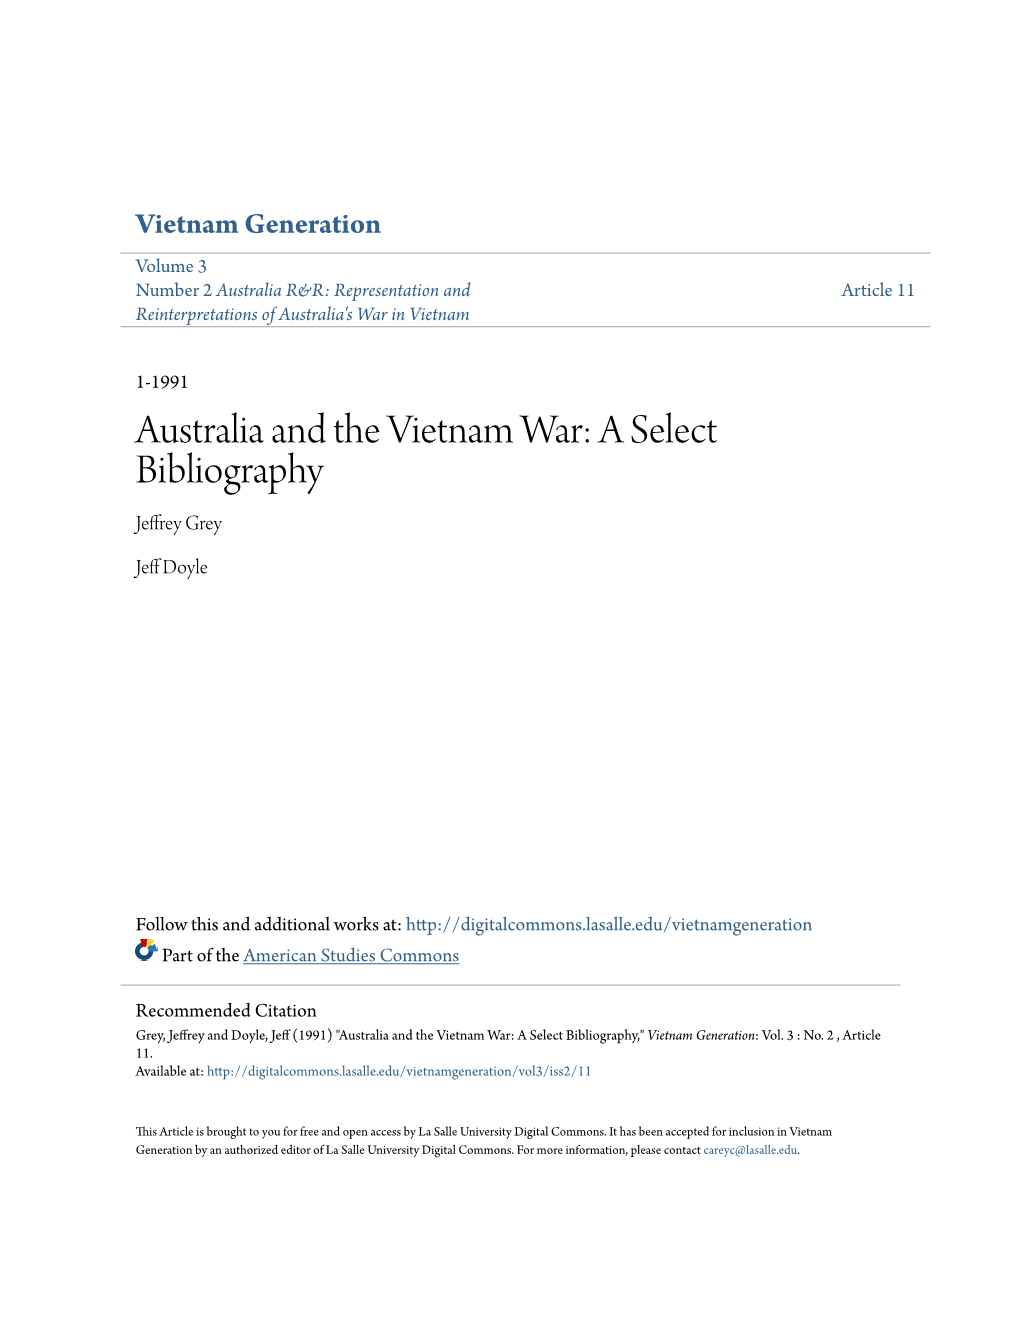 Australia and the Vietnam War: a Select Bibliography Jeffrey Grey